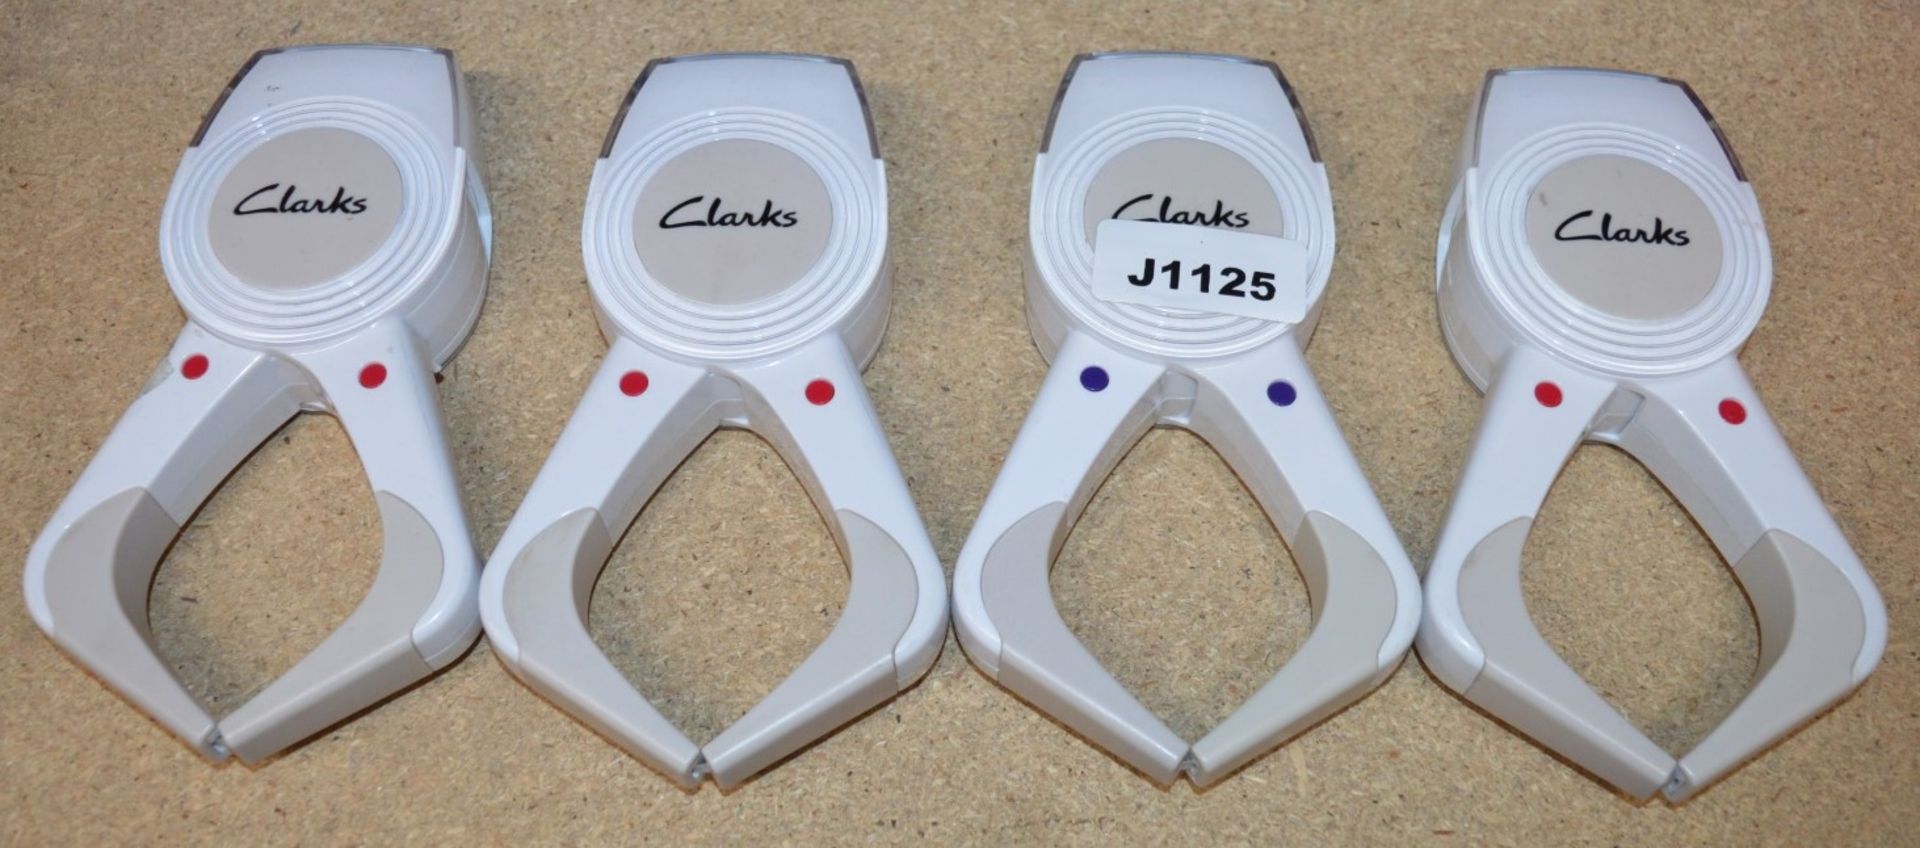 4 x Clarks Digital Foot Gauge Measures - CL285 - Ref J1125 - Location: Altrincham WA14